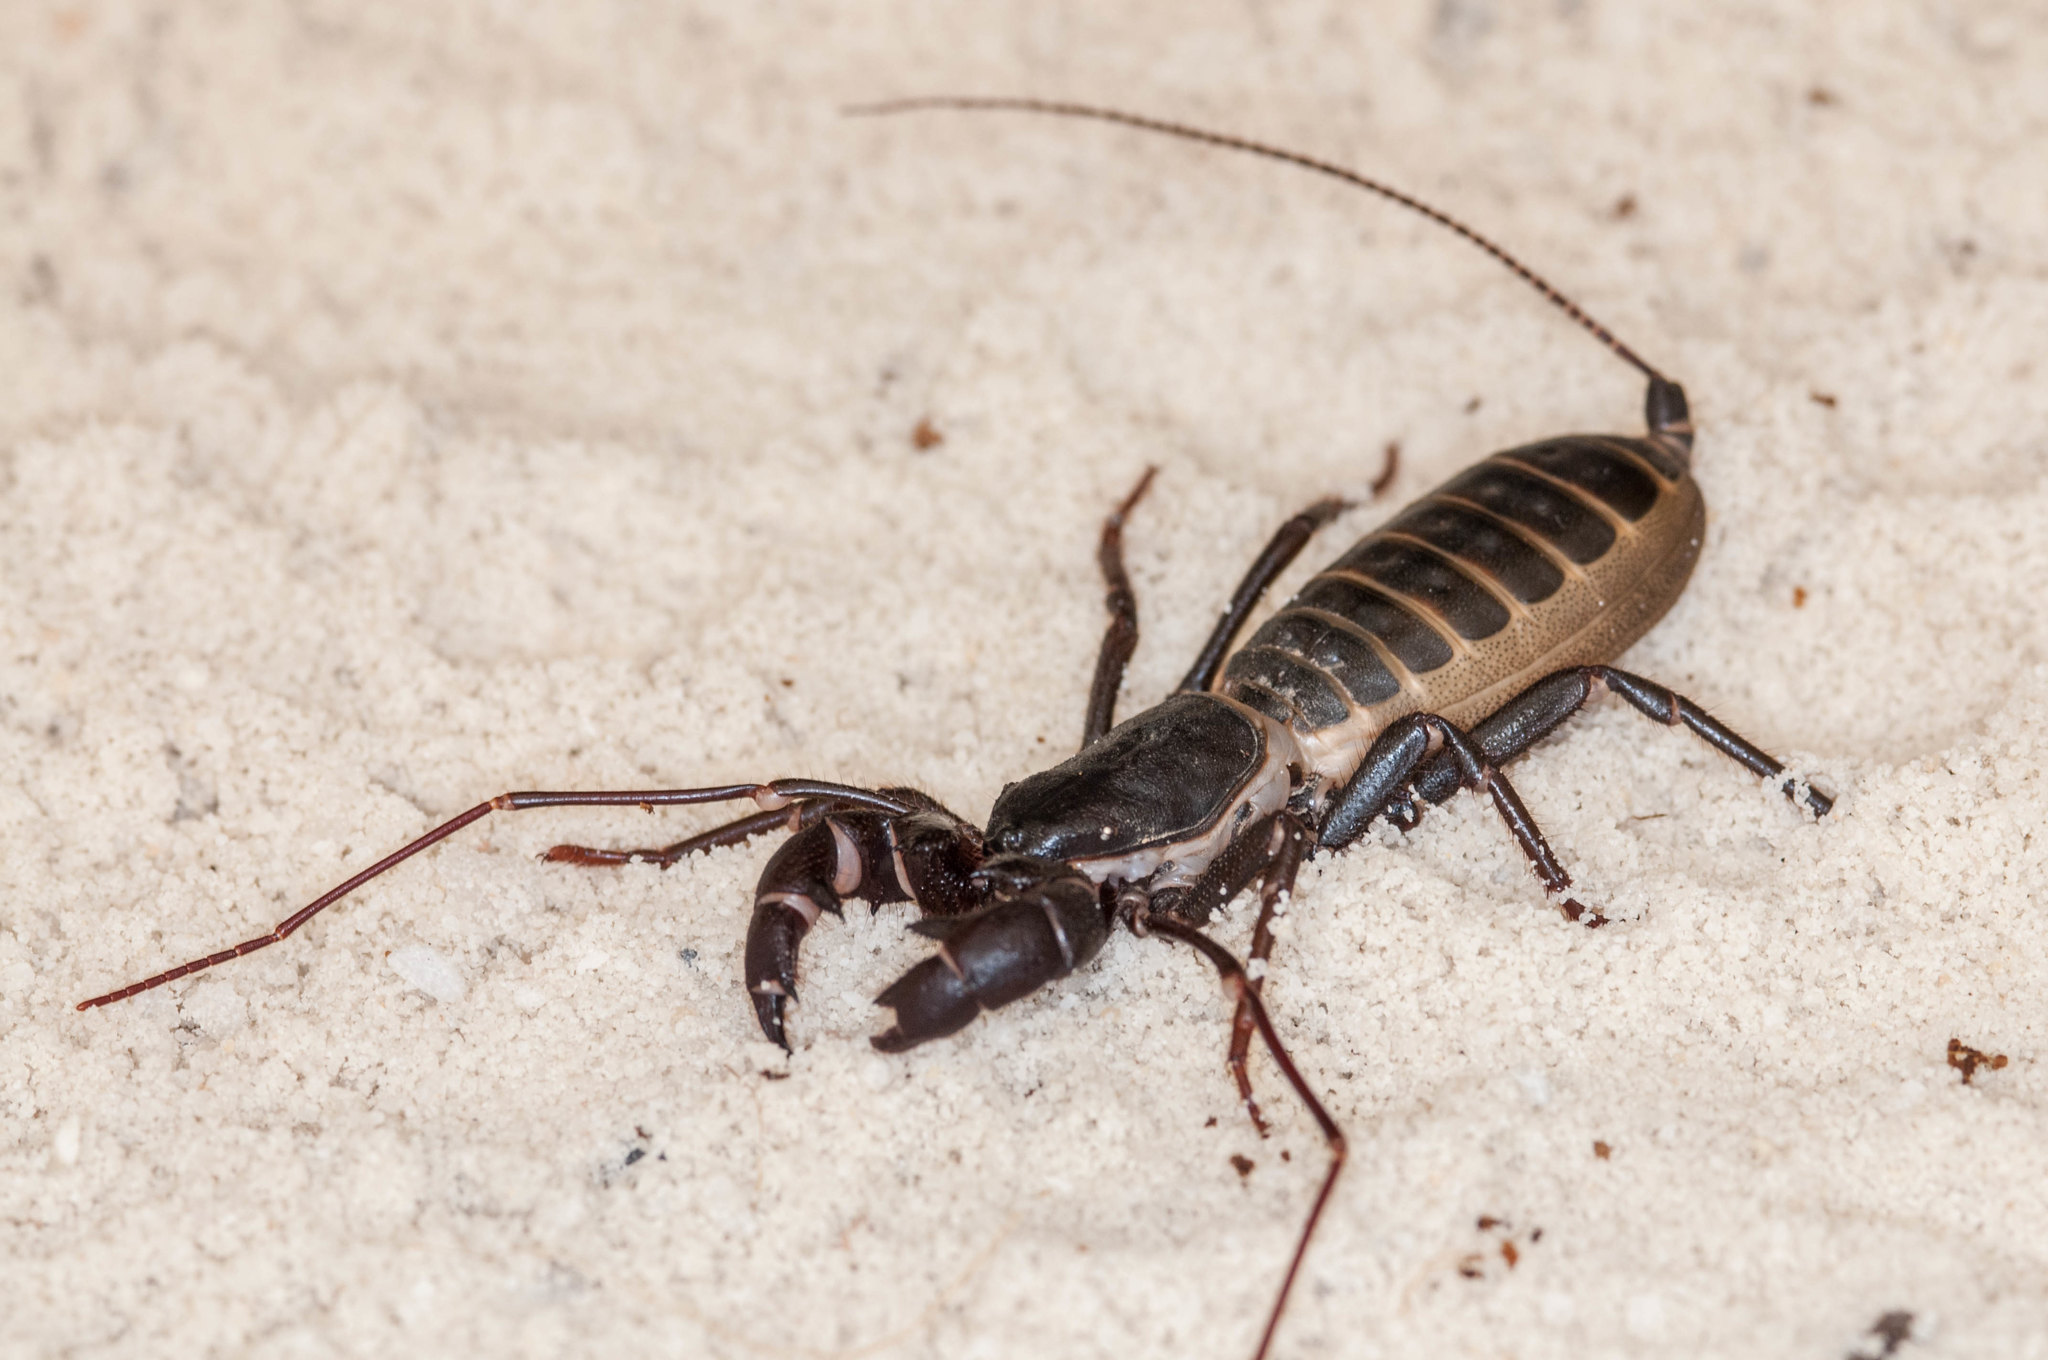 A photo of a vinegaroon scorpion